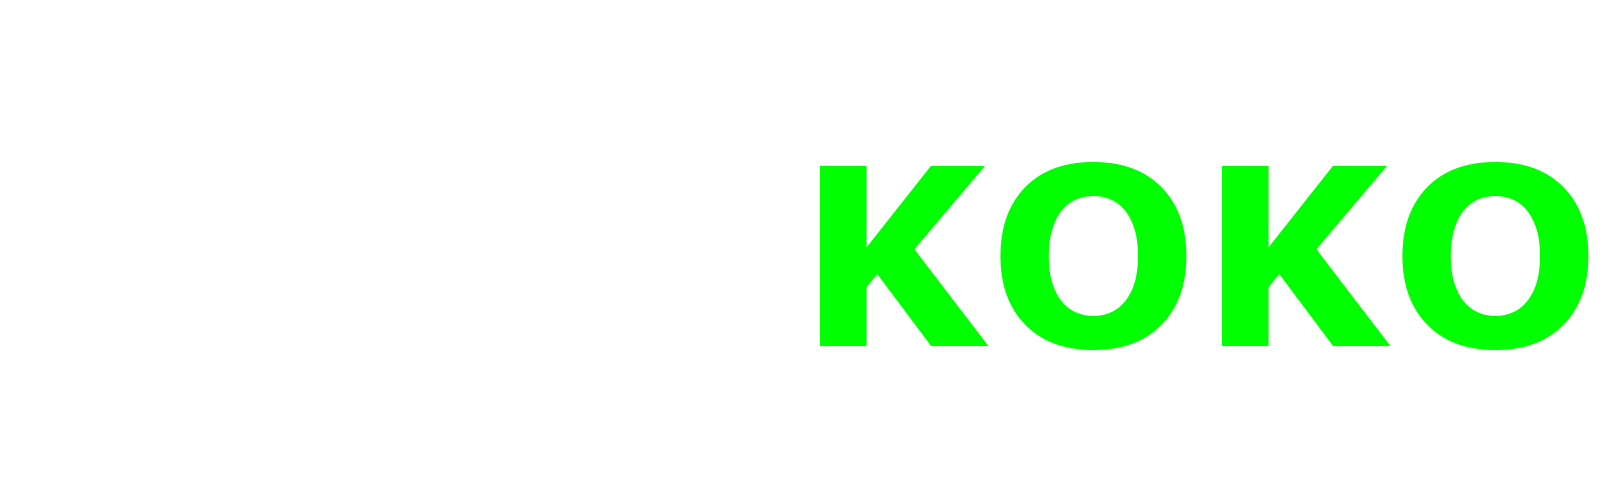 logo web pornkoko.com